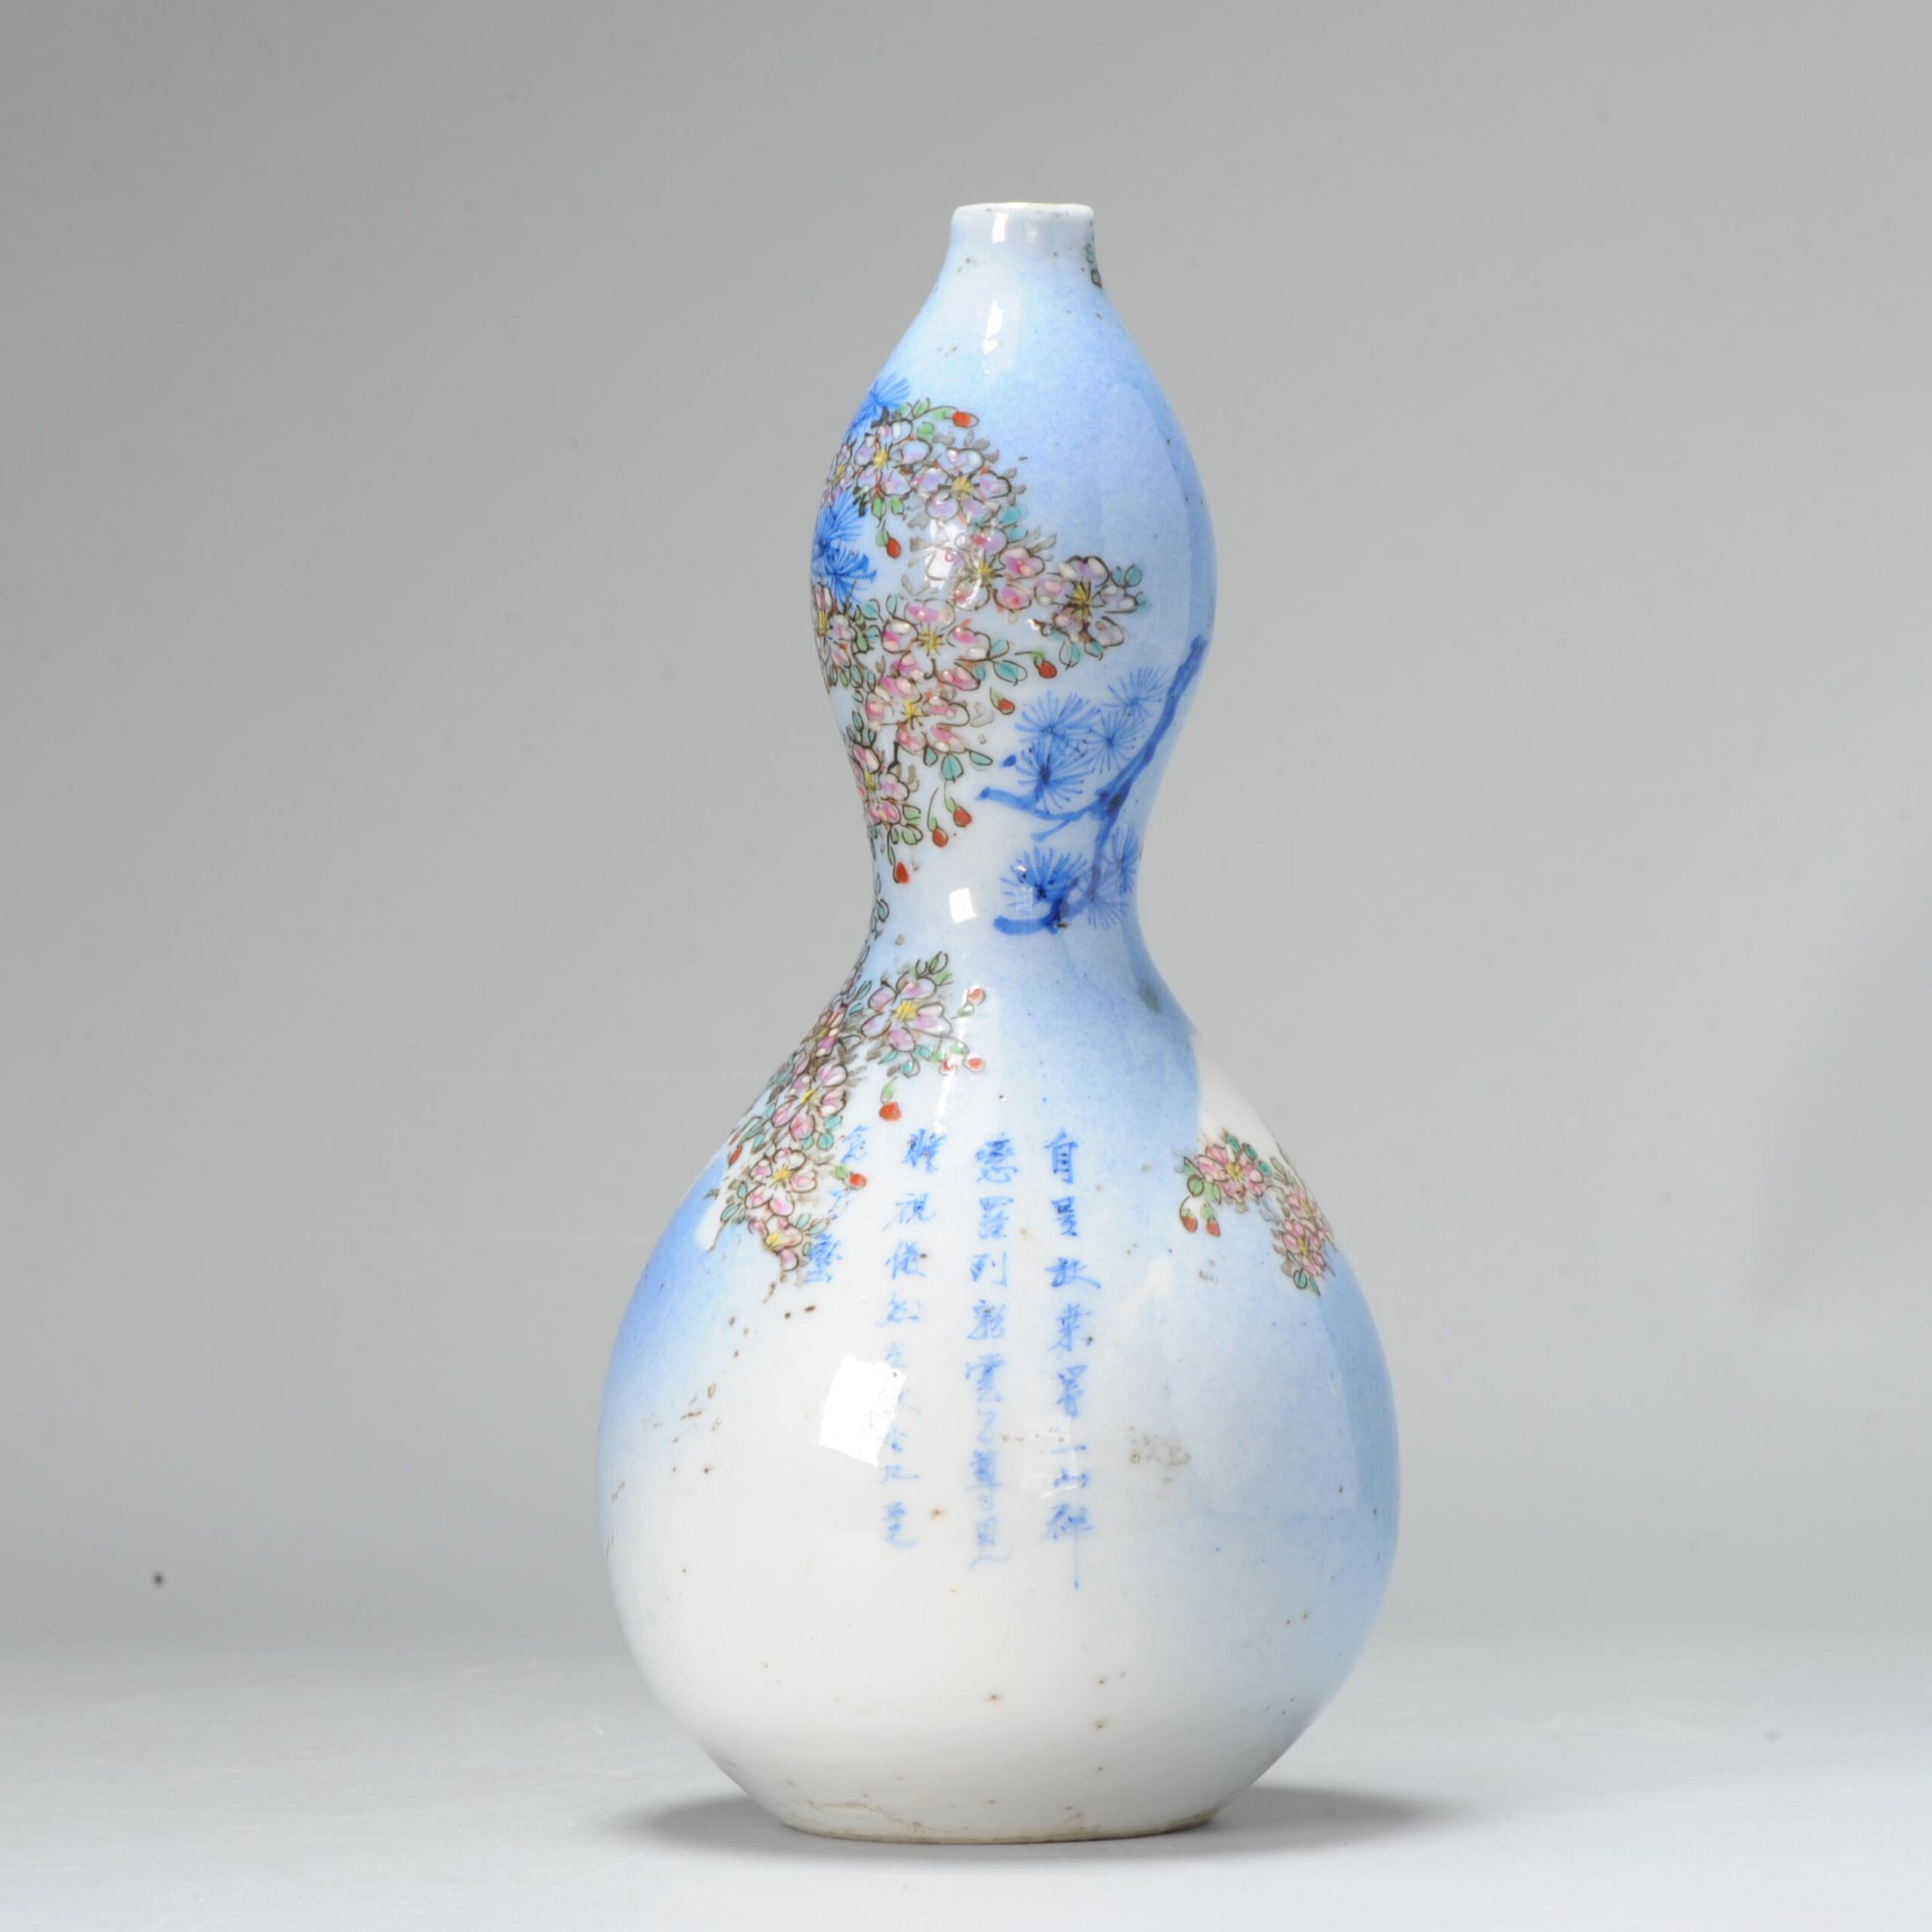 Antique Meiji period Japanese Double Gourd Vase 19th century Blue White Enamel